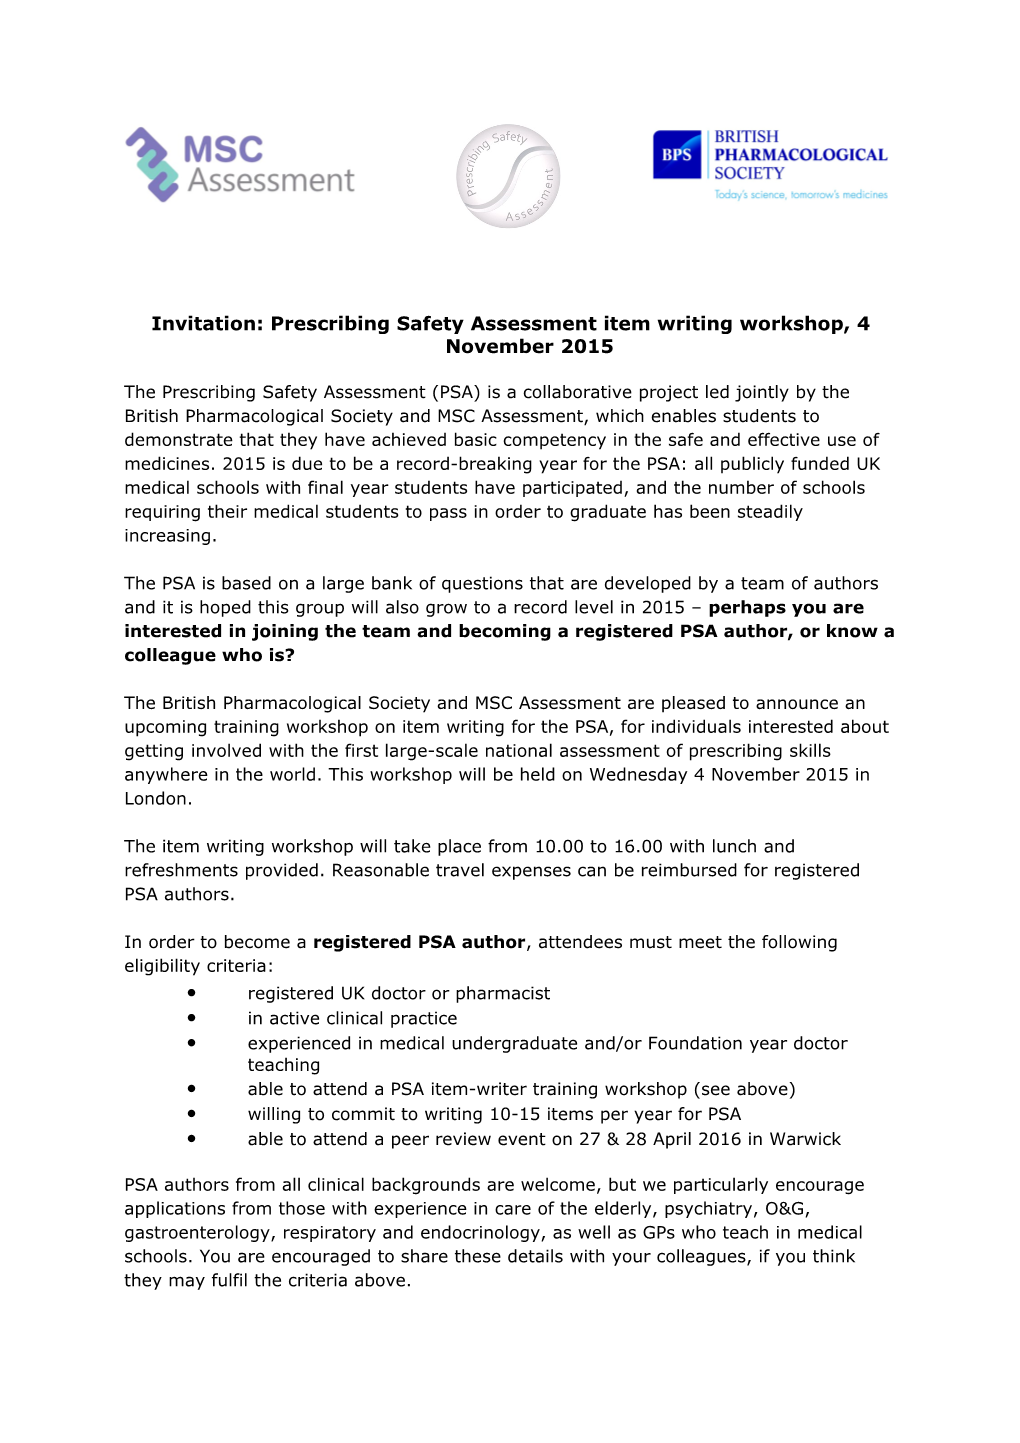 Invitation: Prescribing Safety Assessment Item Writing Workshop, 4 November 2015